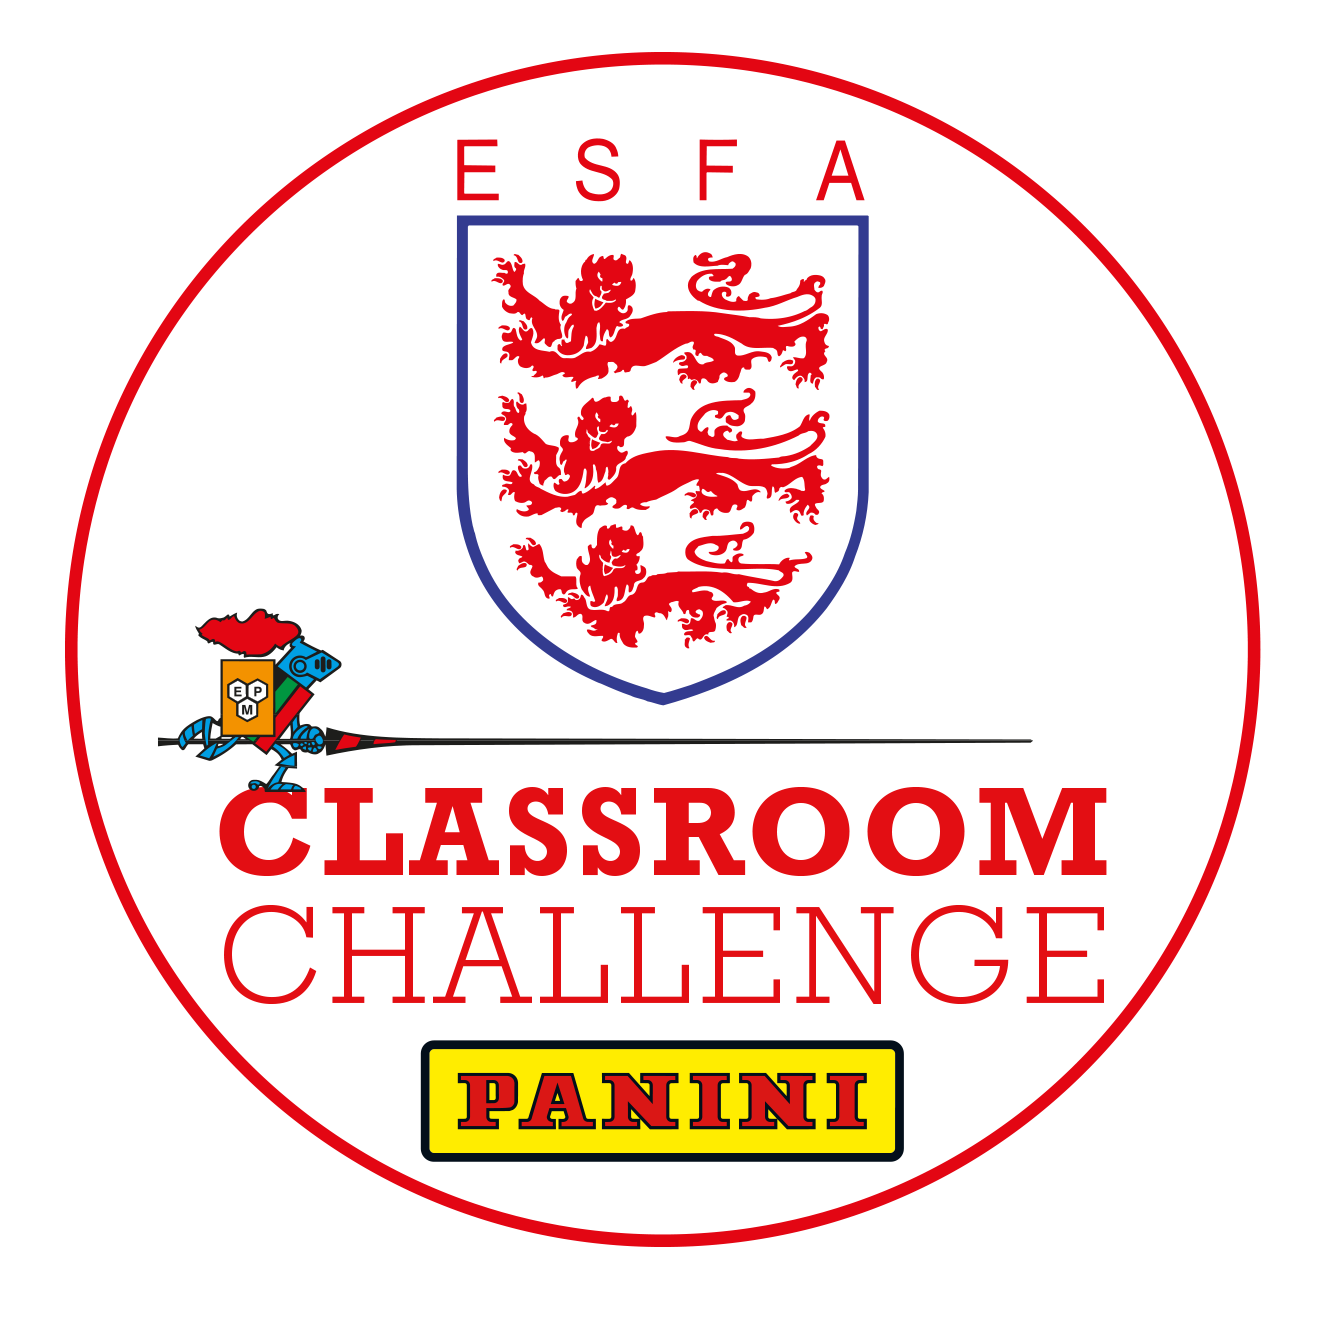 ESFA Panini Classroom Challenge logo